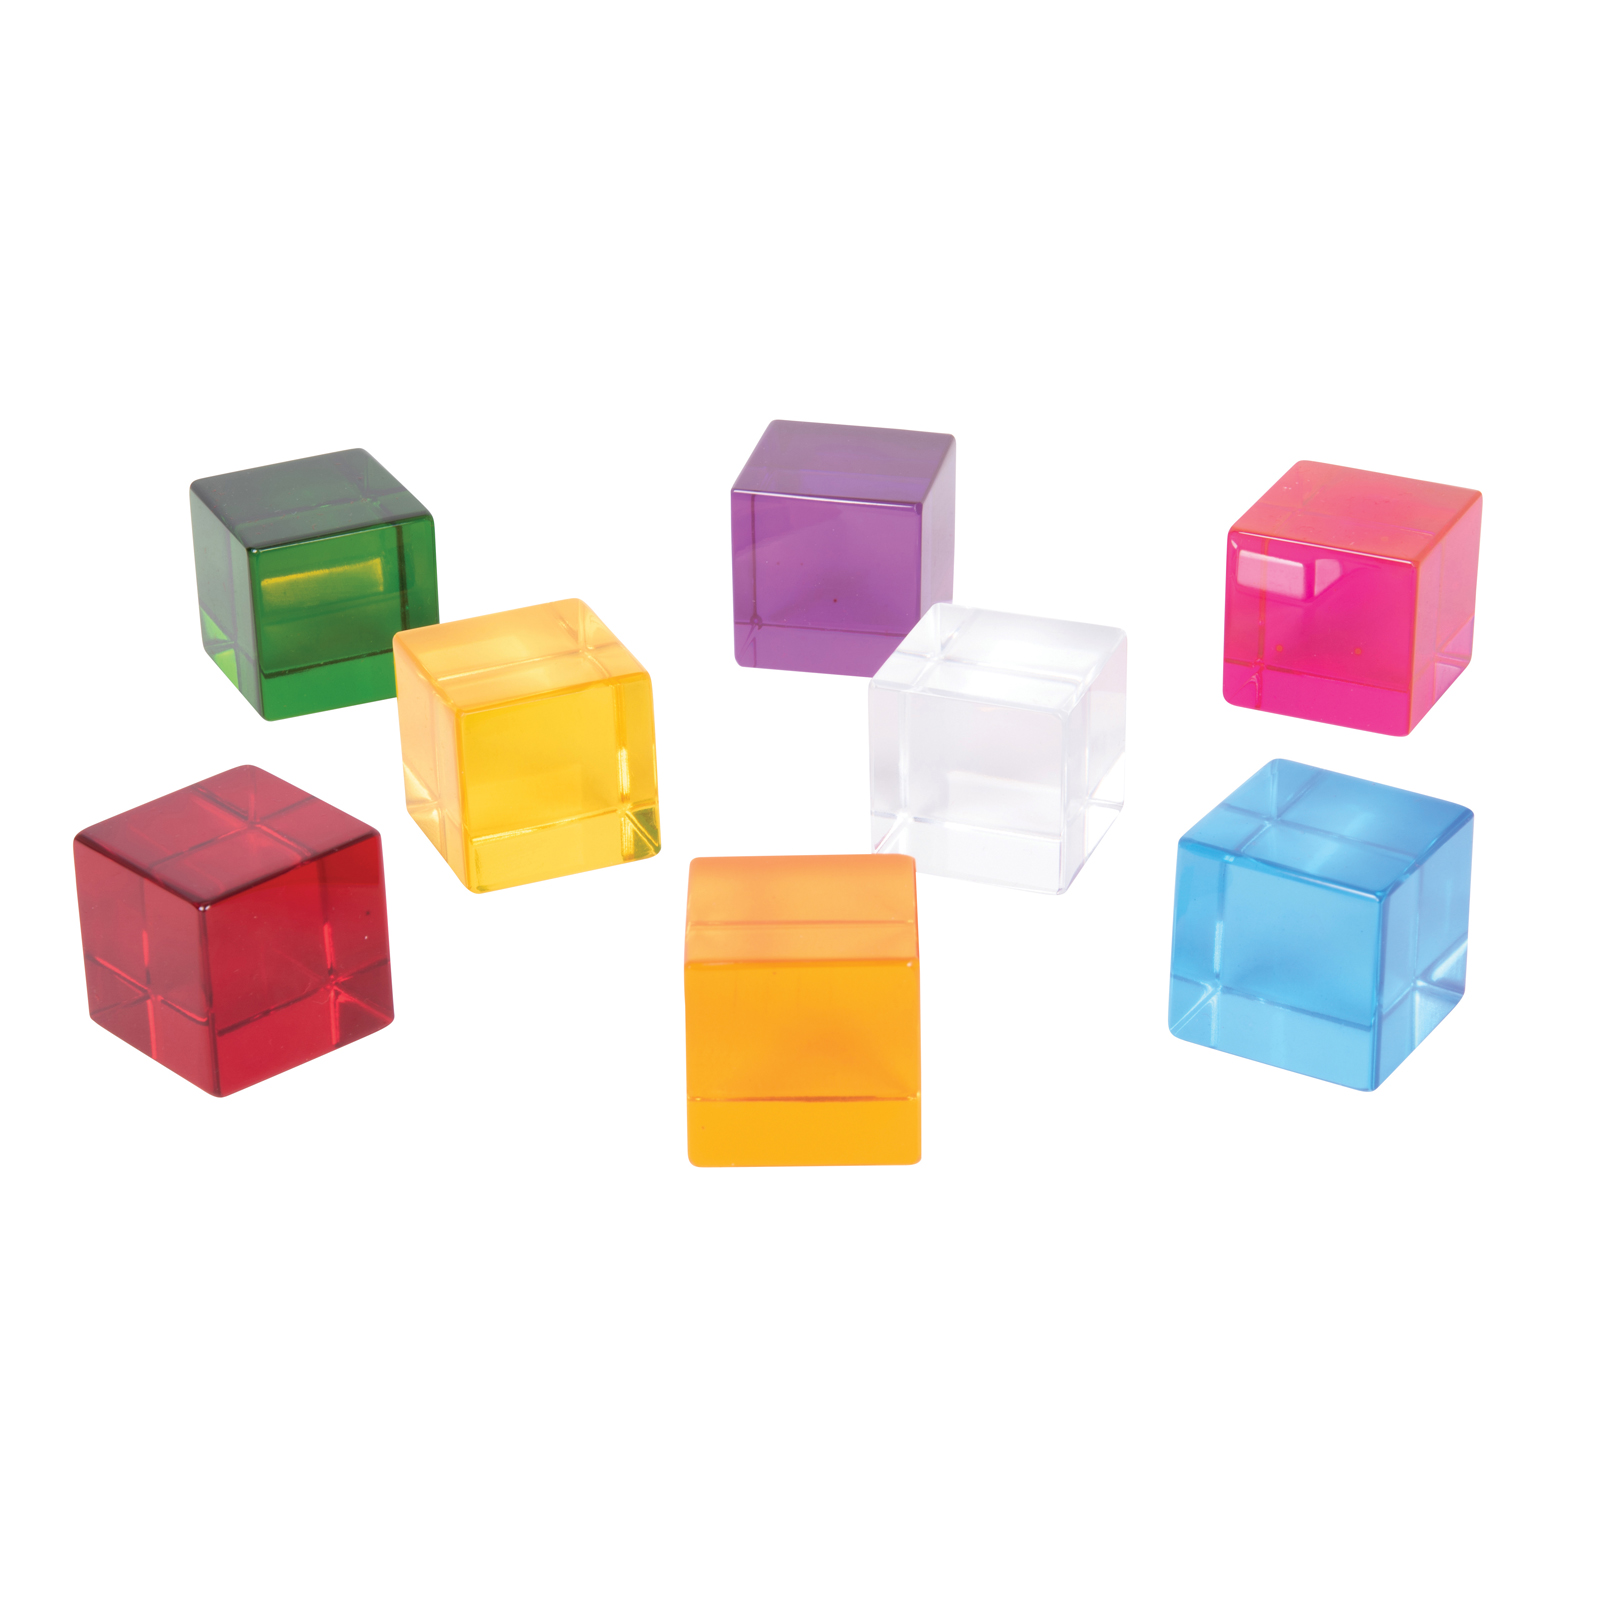 TickiT Perception Cubes - Set of 8 - Assorted Colors - Transparent Manipulatives